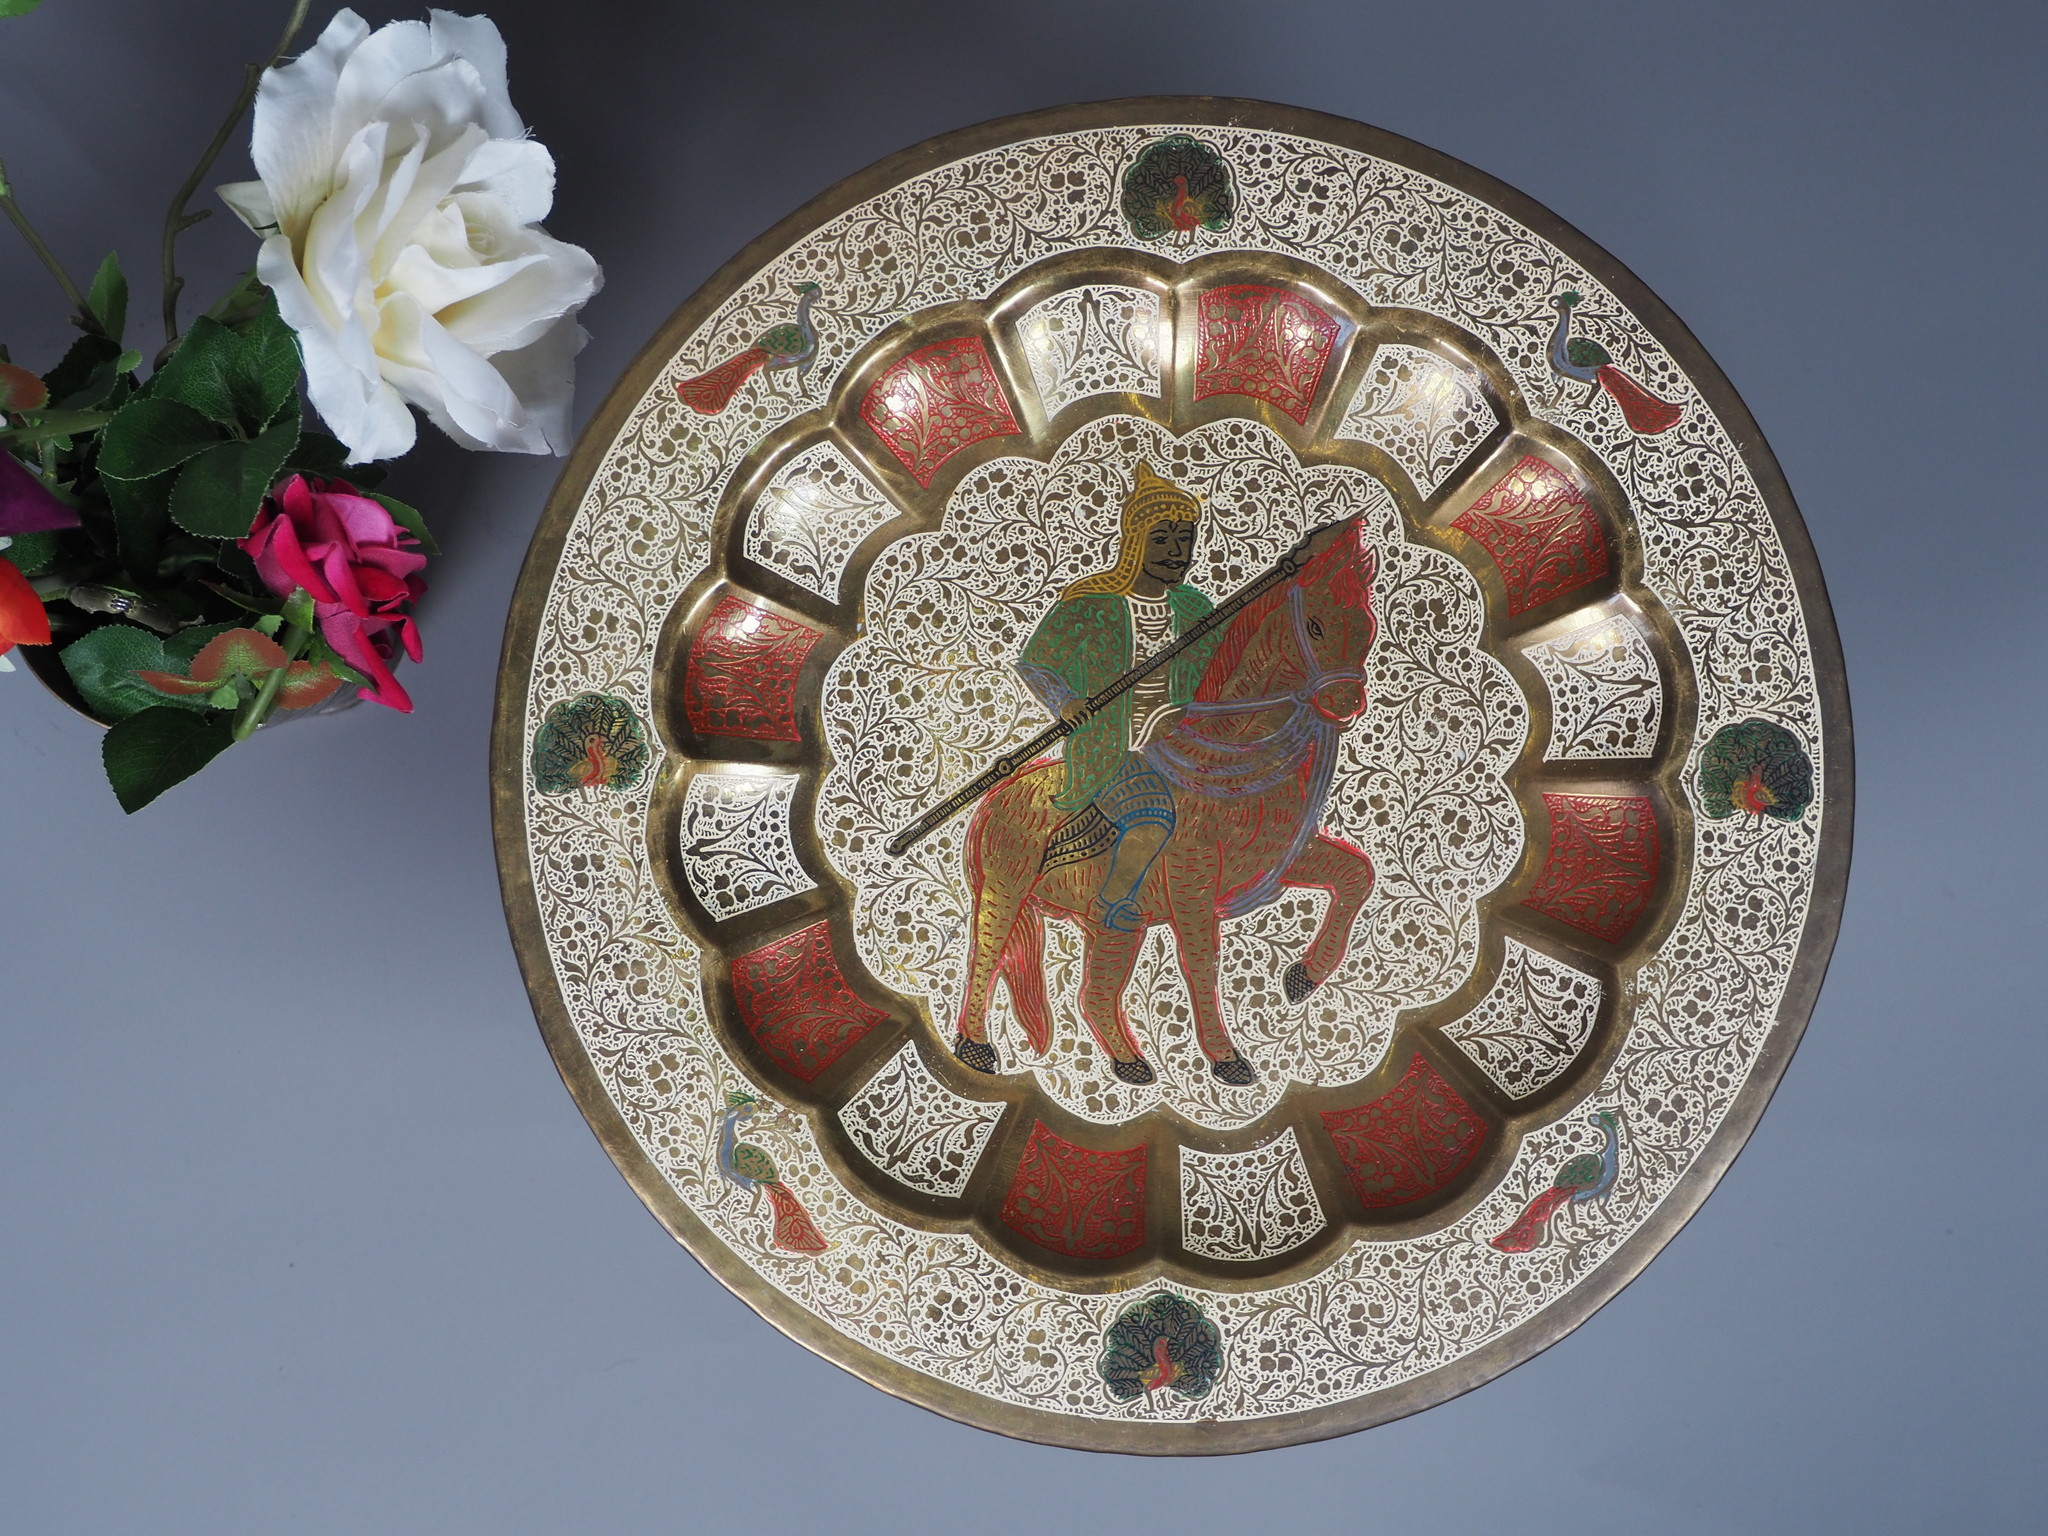 35 cm antique Indian enamel work brass plate tray No: K10